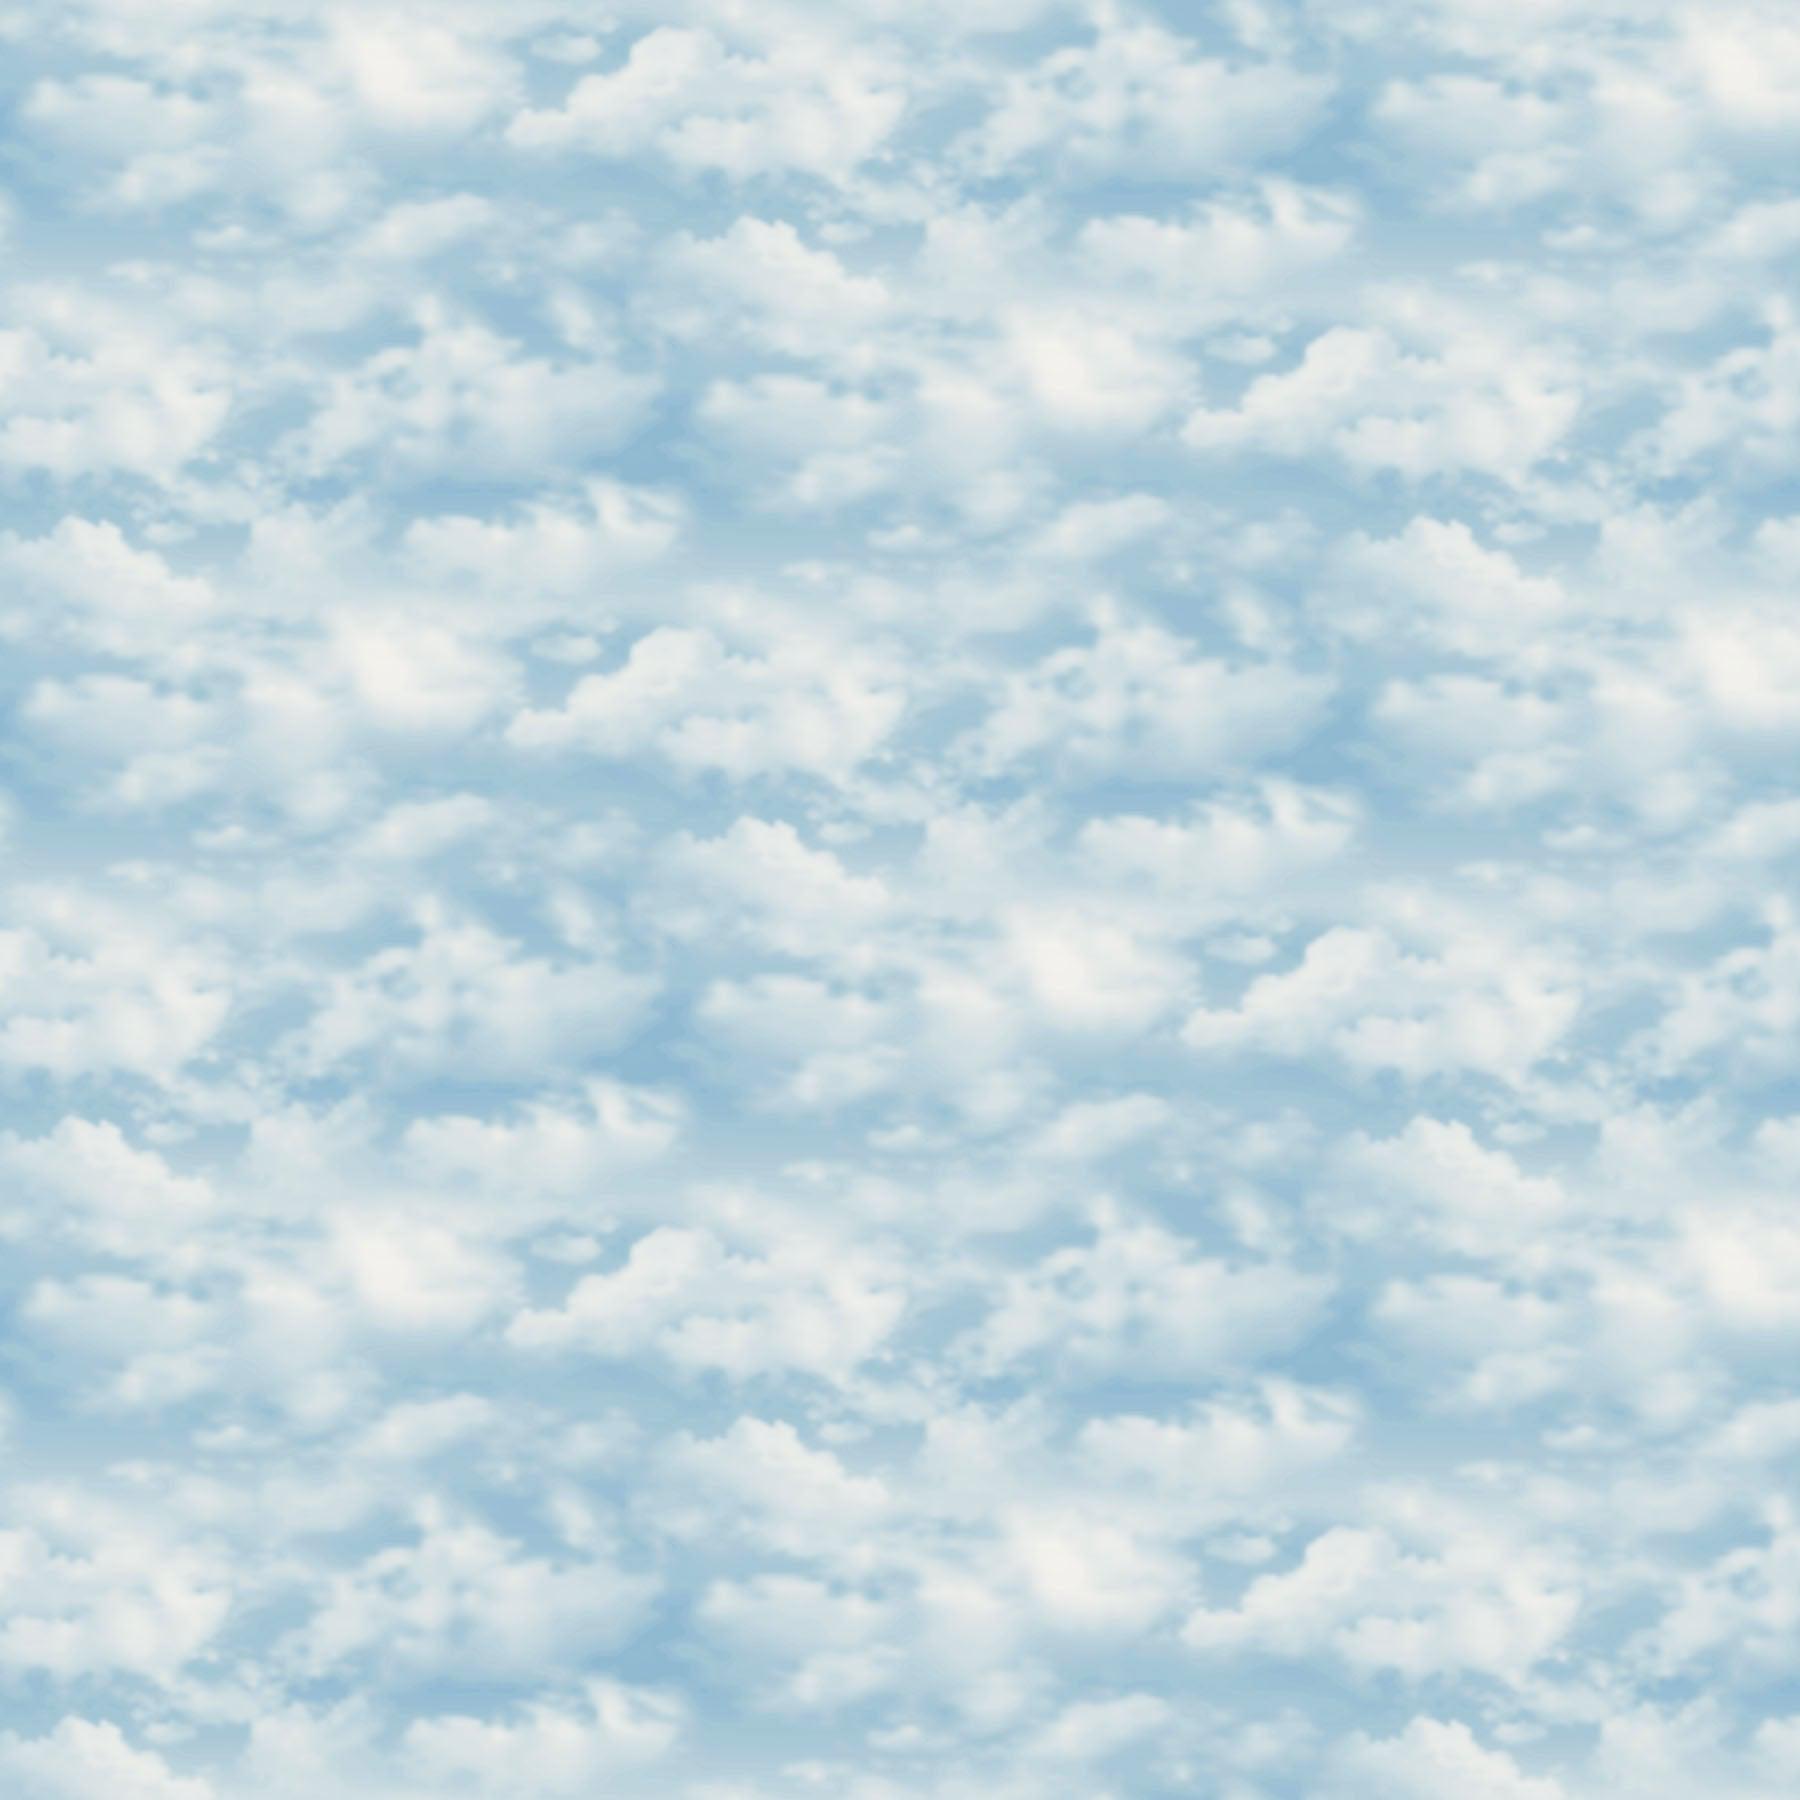 Hidden Valley Naturescapes Blue Clouds Digital Print Fabric